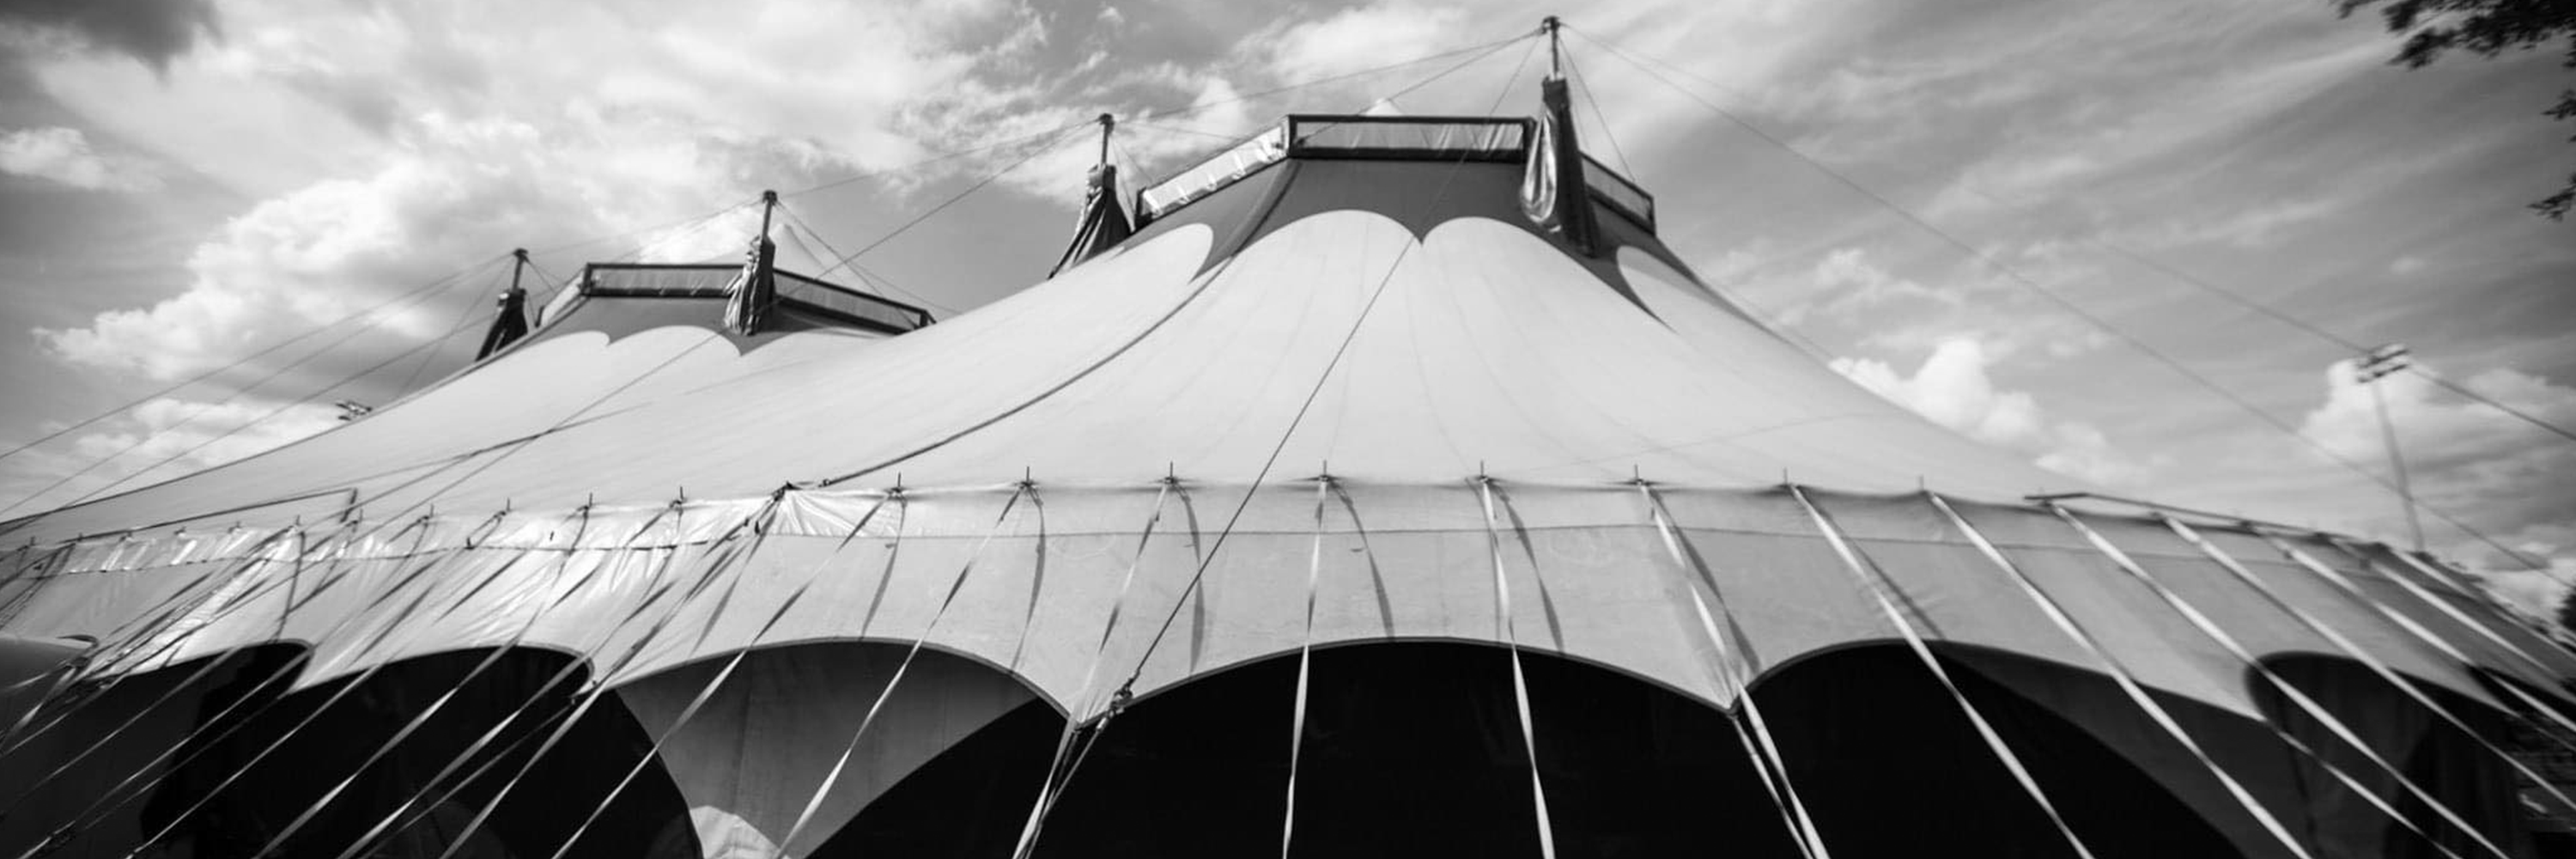 FSU Circus Tent